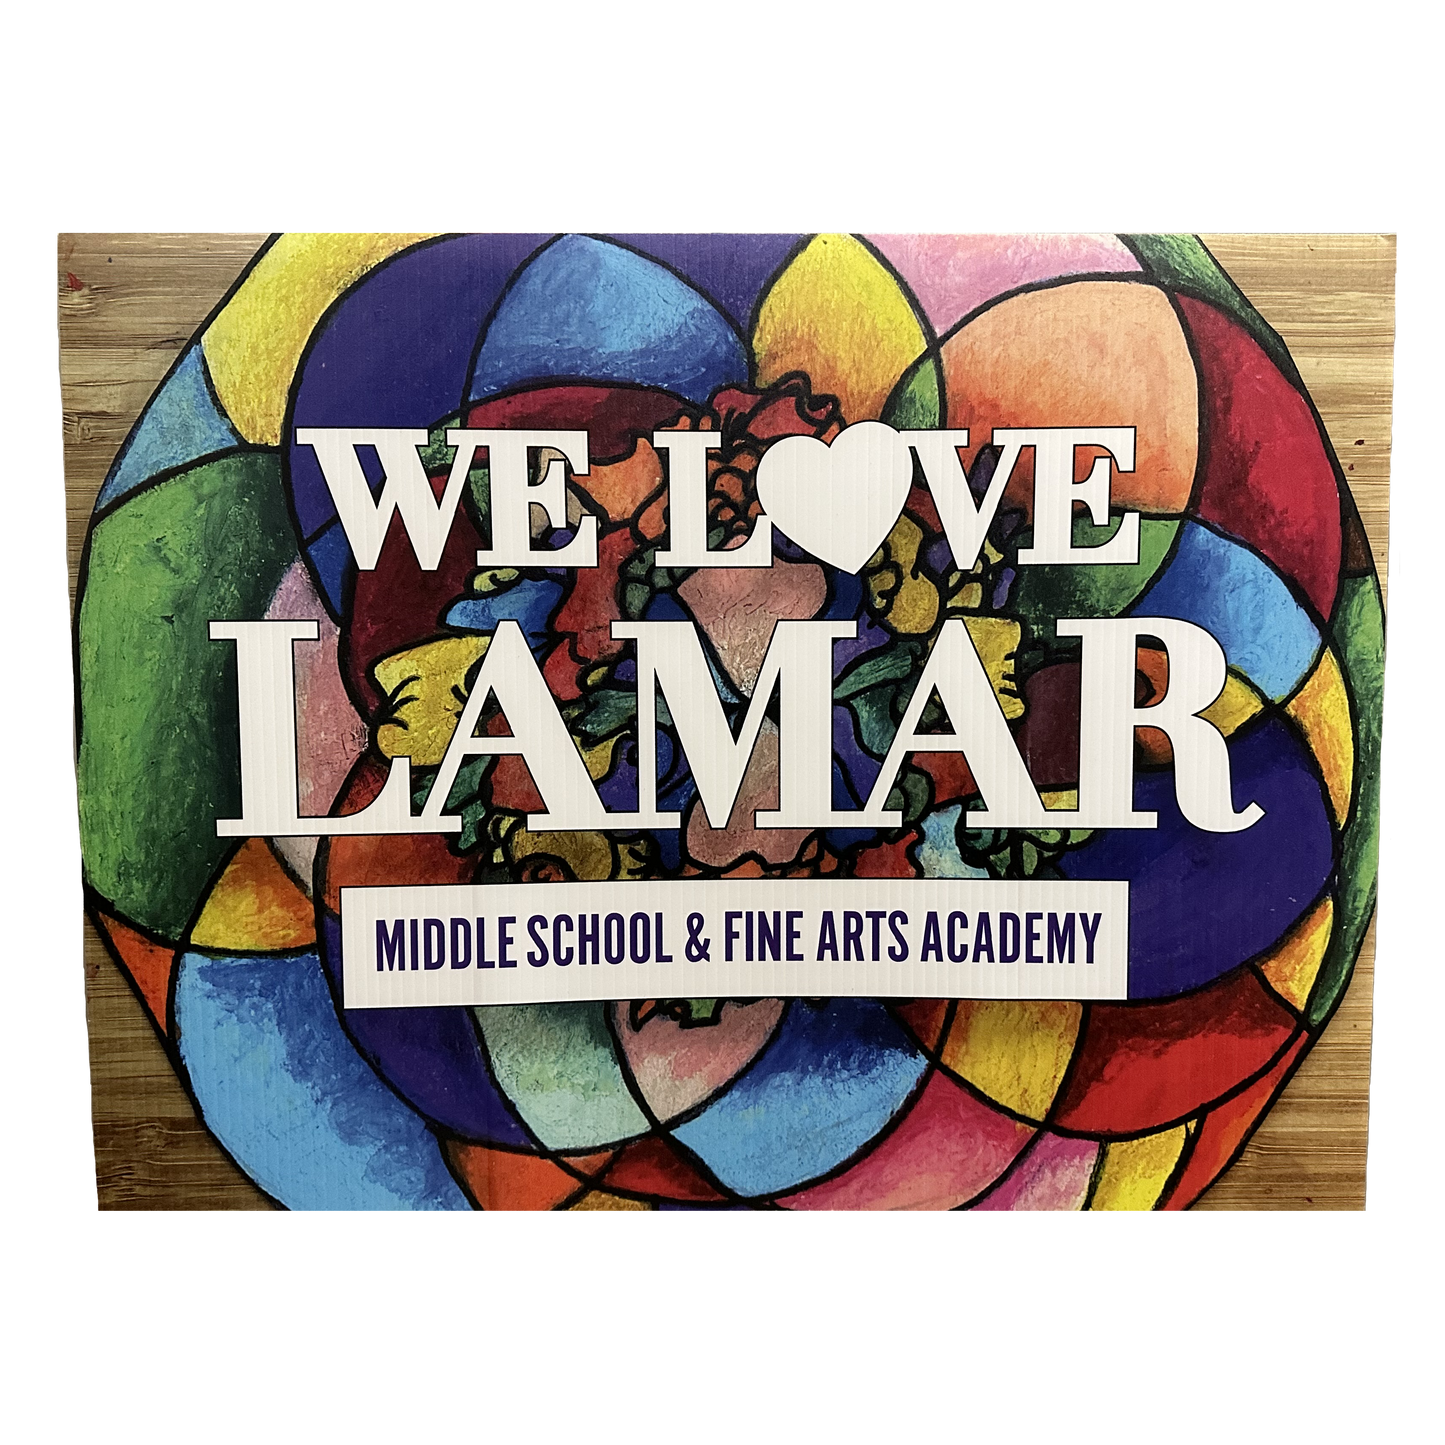 We Love Lamar Yard Sign - Kaleidoscope Edition